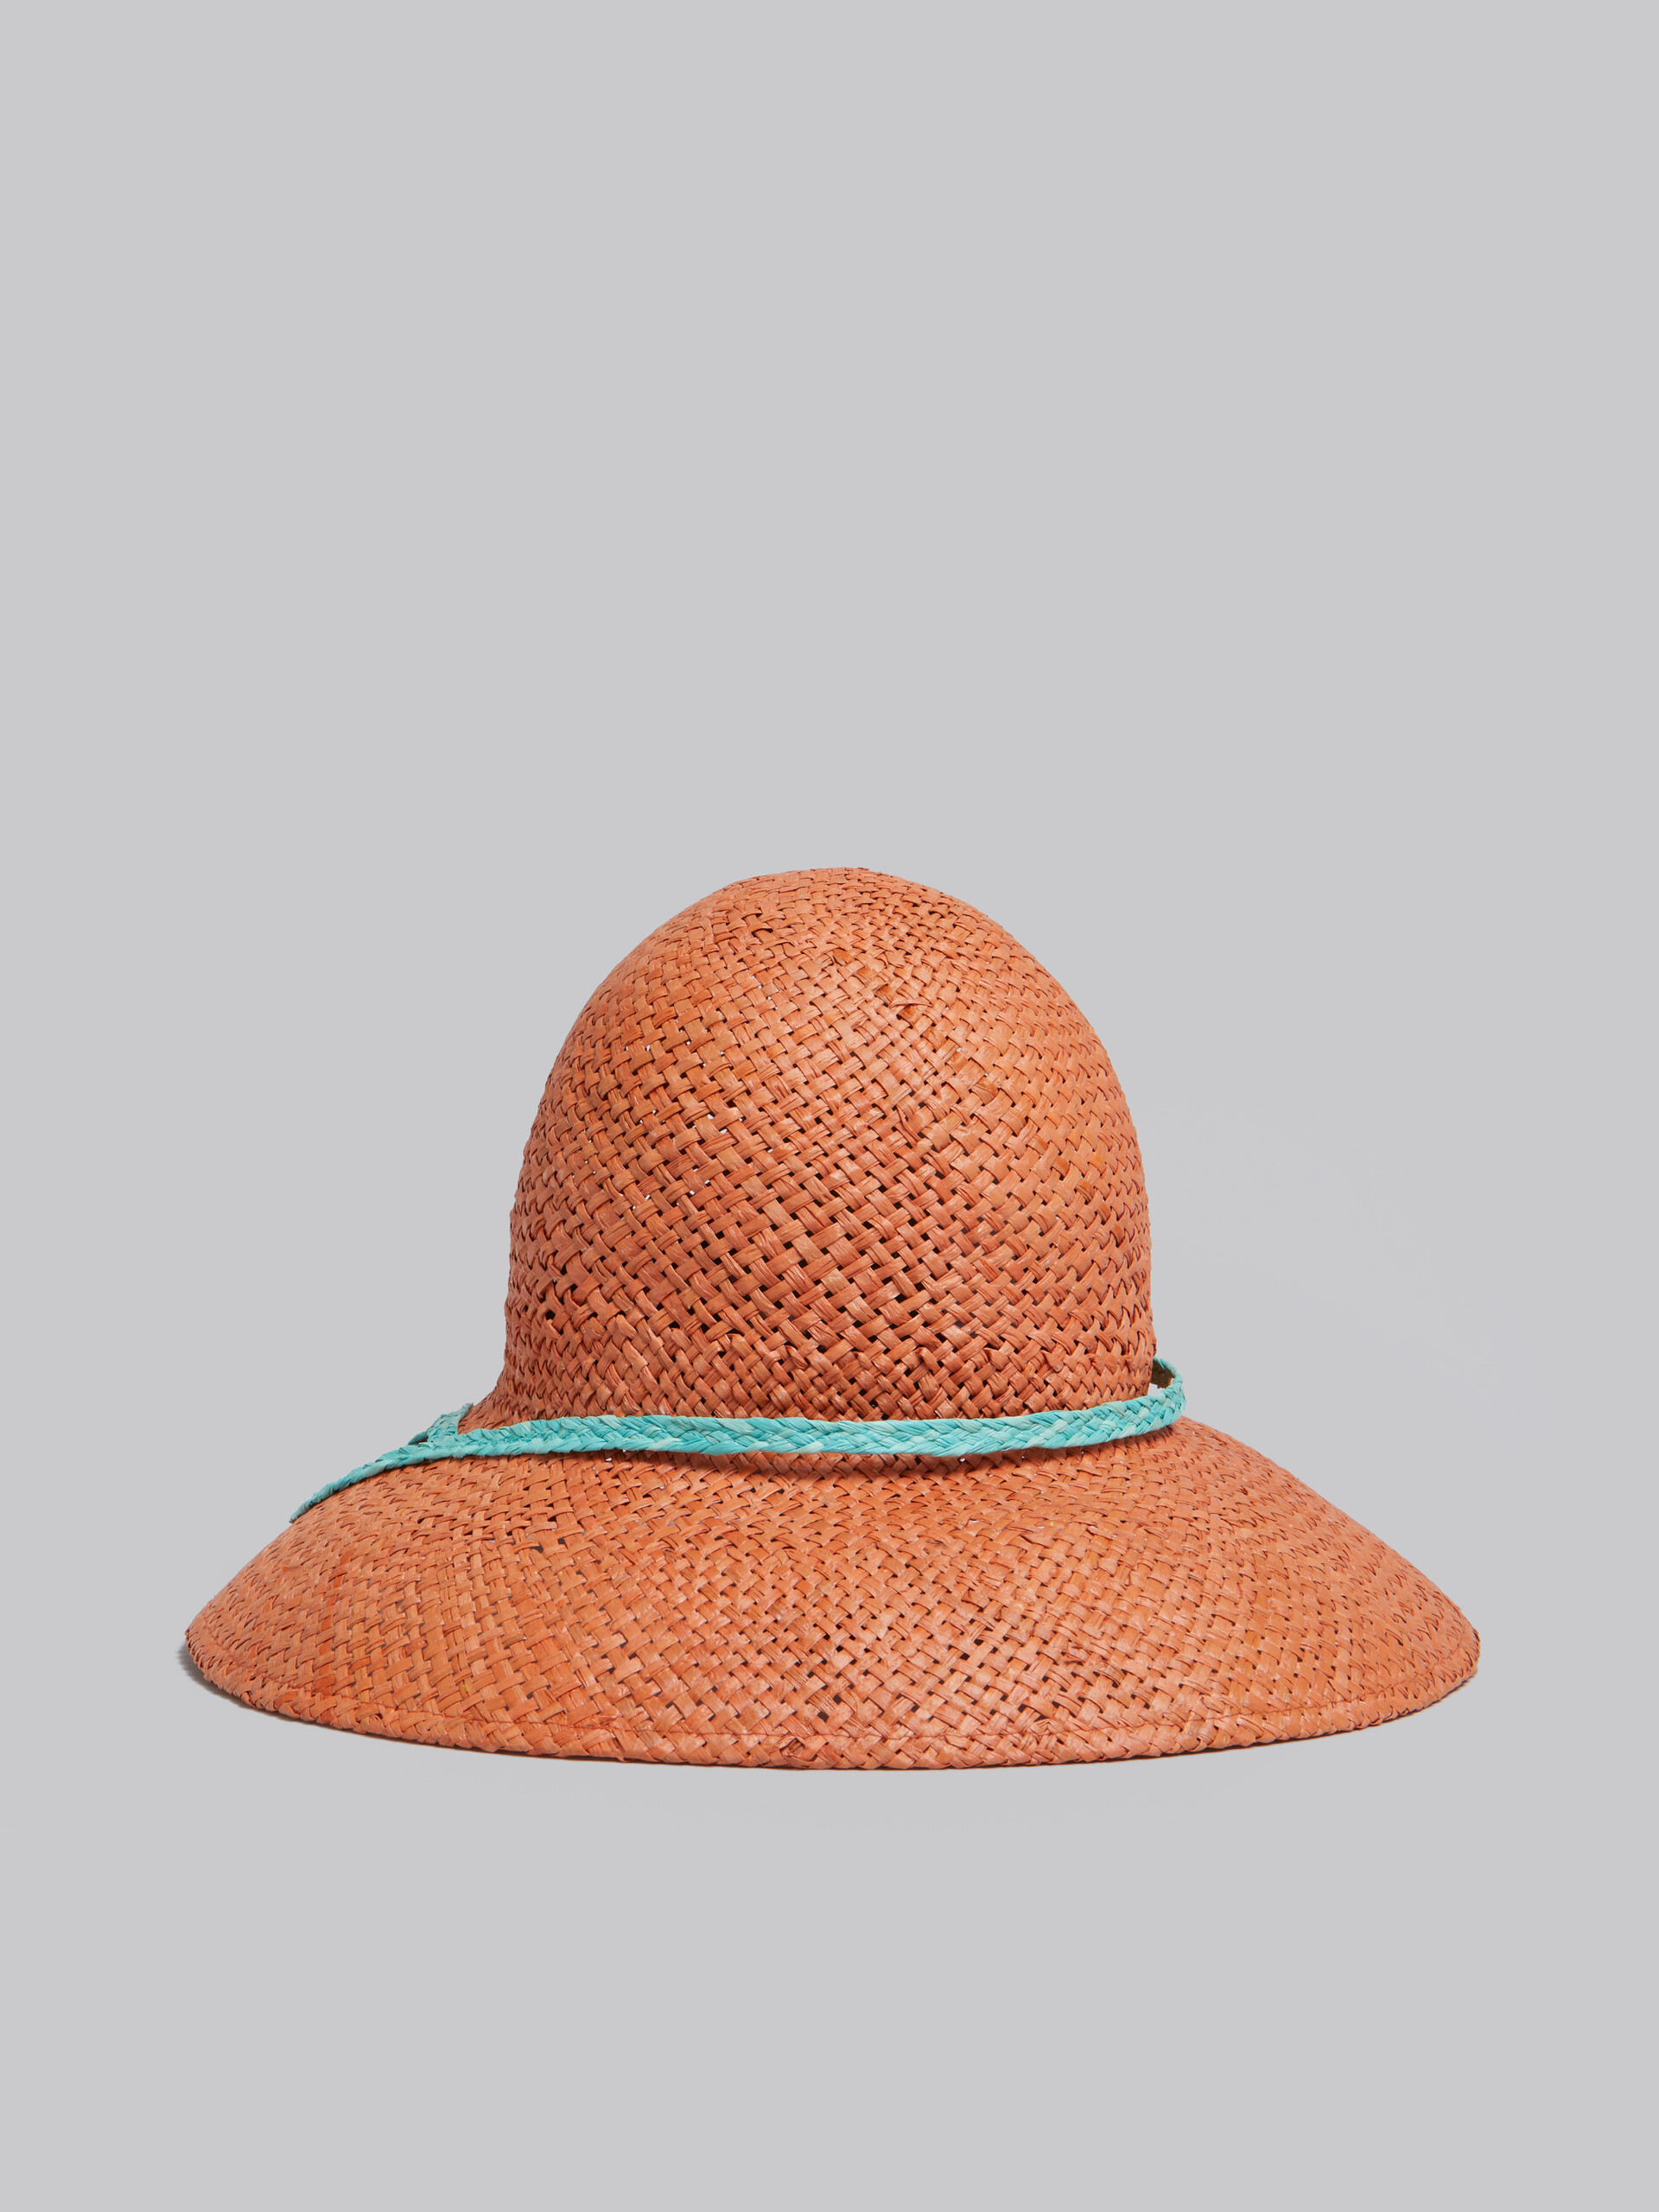 Marni x No Vacancy Inn - Orange hat in raffia with cut-outs - Hats - Image 3